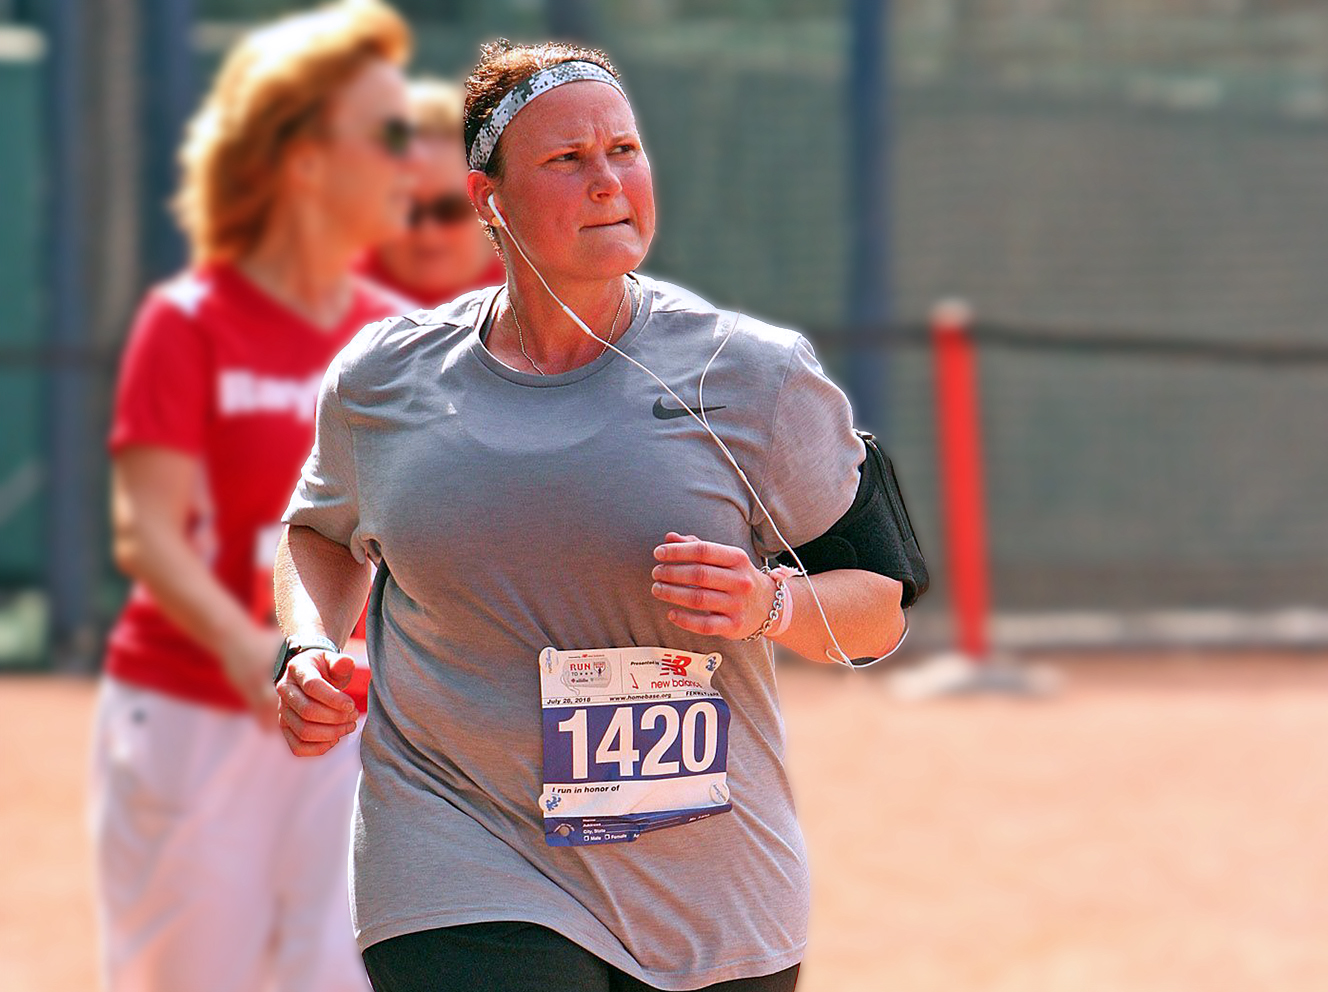 Sister of Fallen Veteran Runs Boston Marathon in His Honor